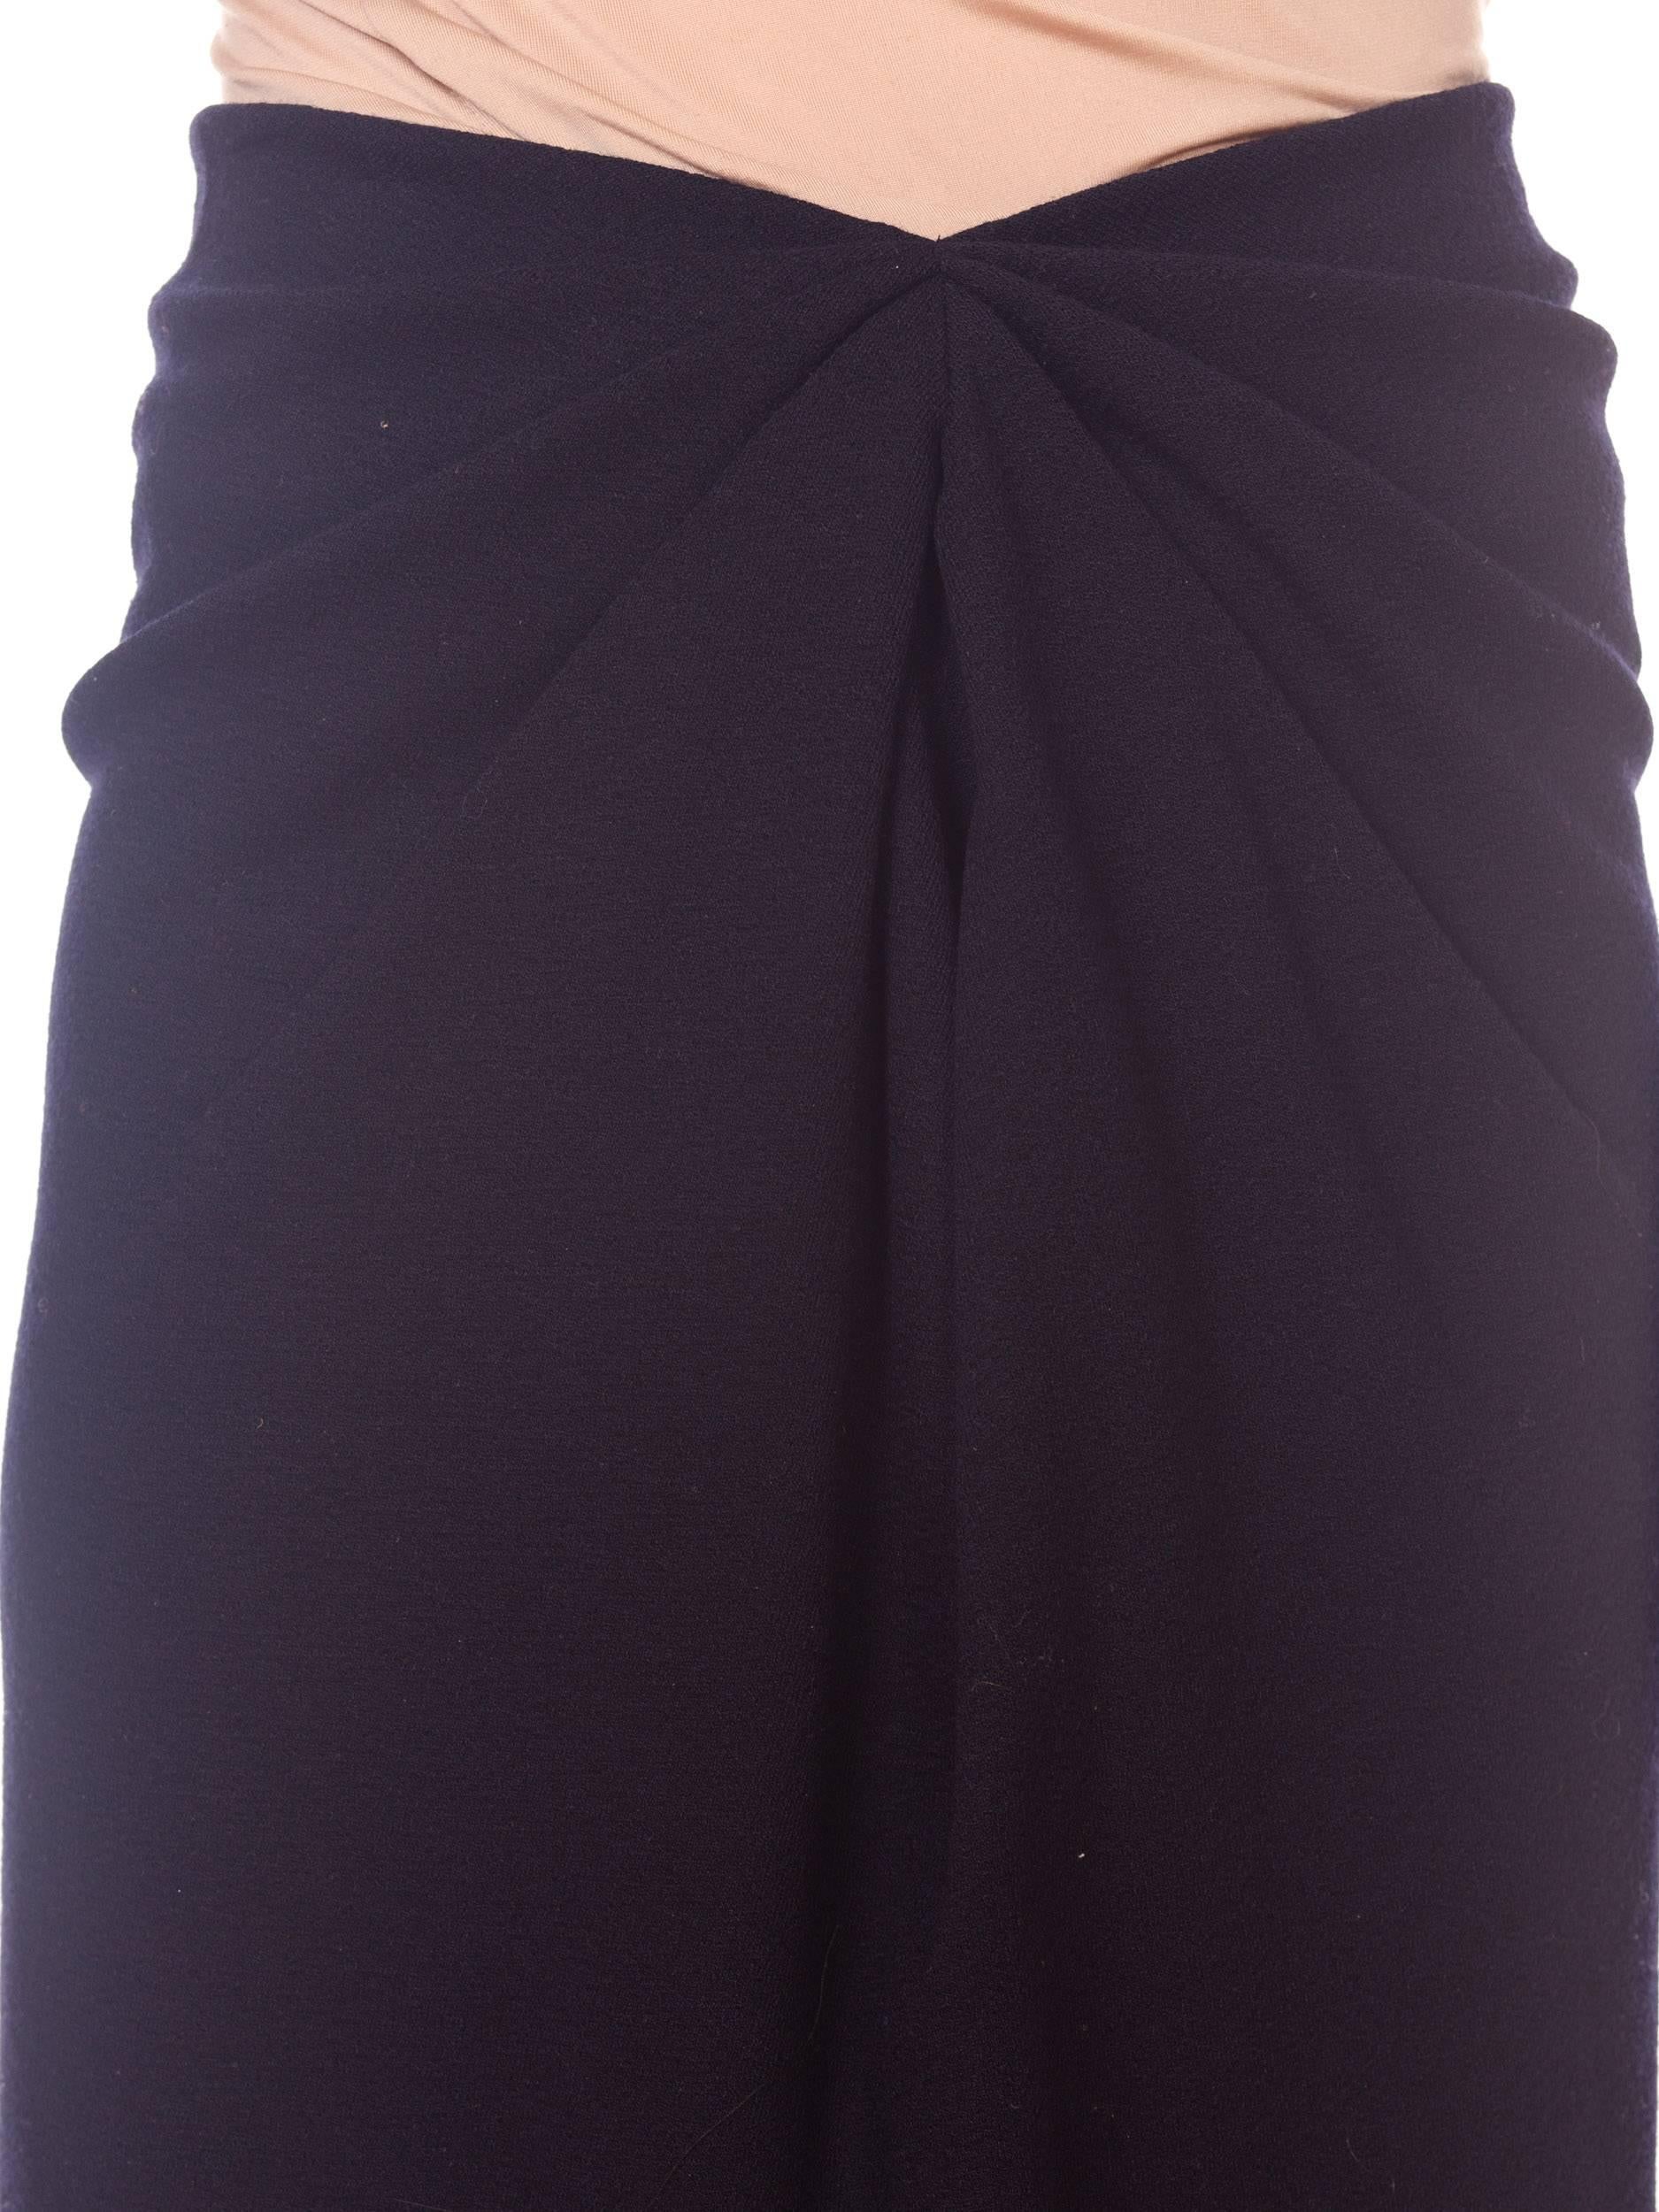 1980S DONNA KARAN Black Wool Jersey 40S Film Noir Style Skirt With Elastic Waist For Sale 5